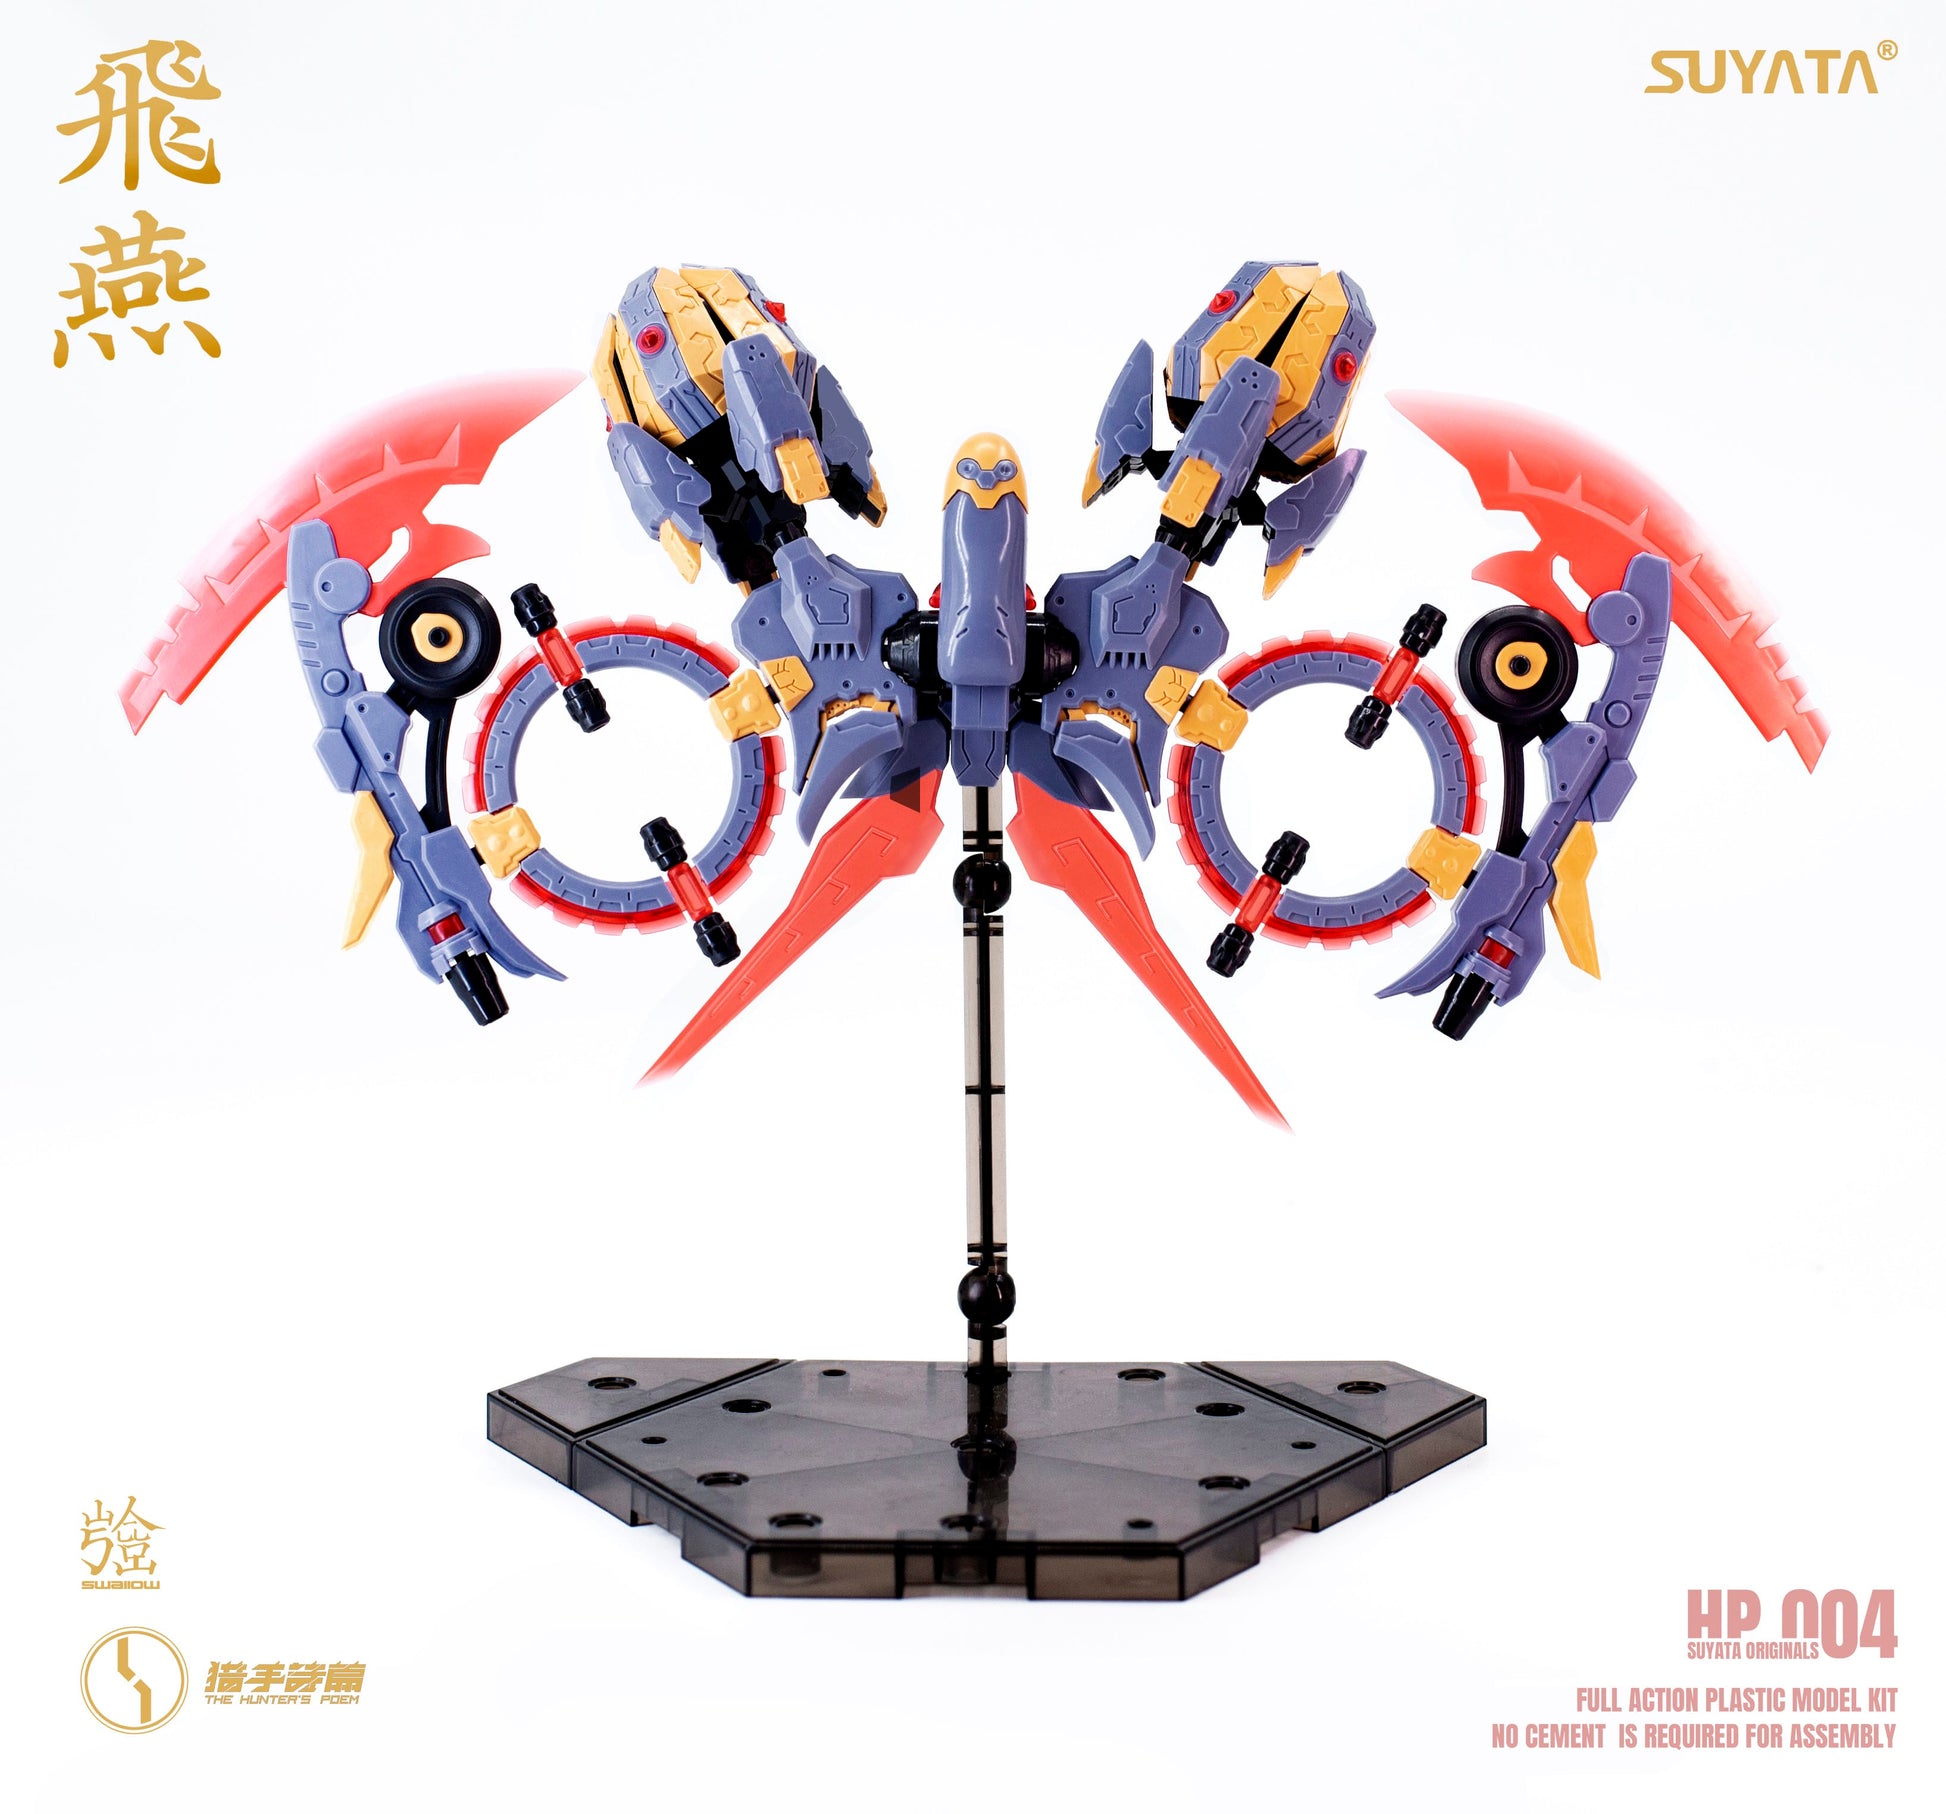 SUYATA HP-004 "The Hunter's Poem" Swallow 1/12 Scale Plastic Model Kit